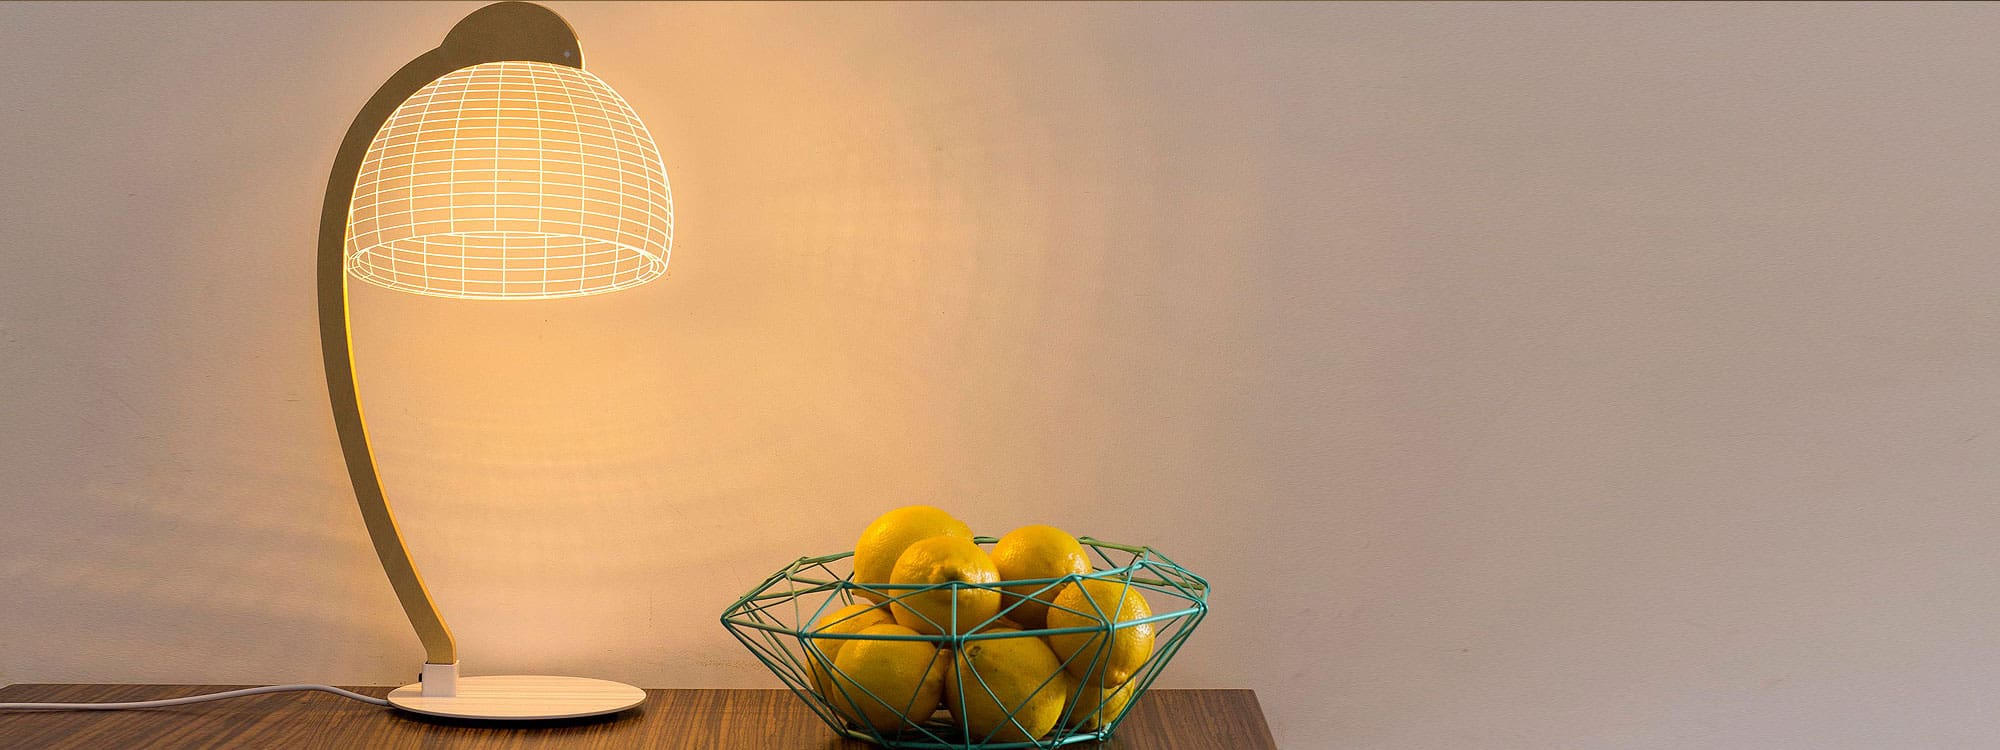 Image of Studio Cheha Dome LED desk lamp next to a bowl of lemons